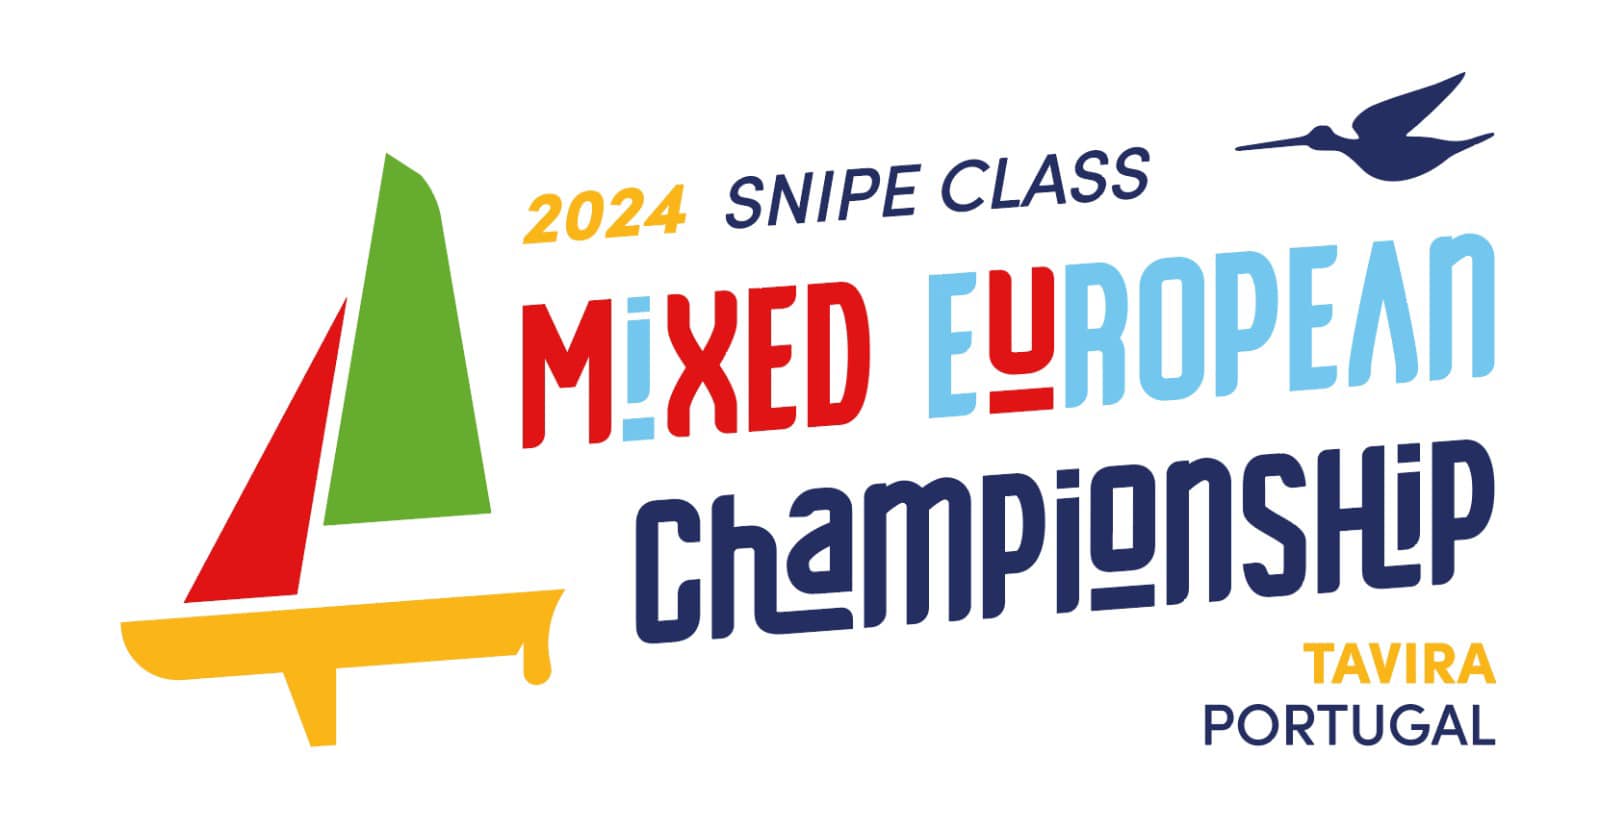 Mixed European Championship Image